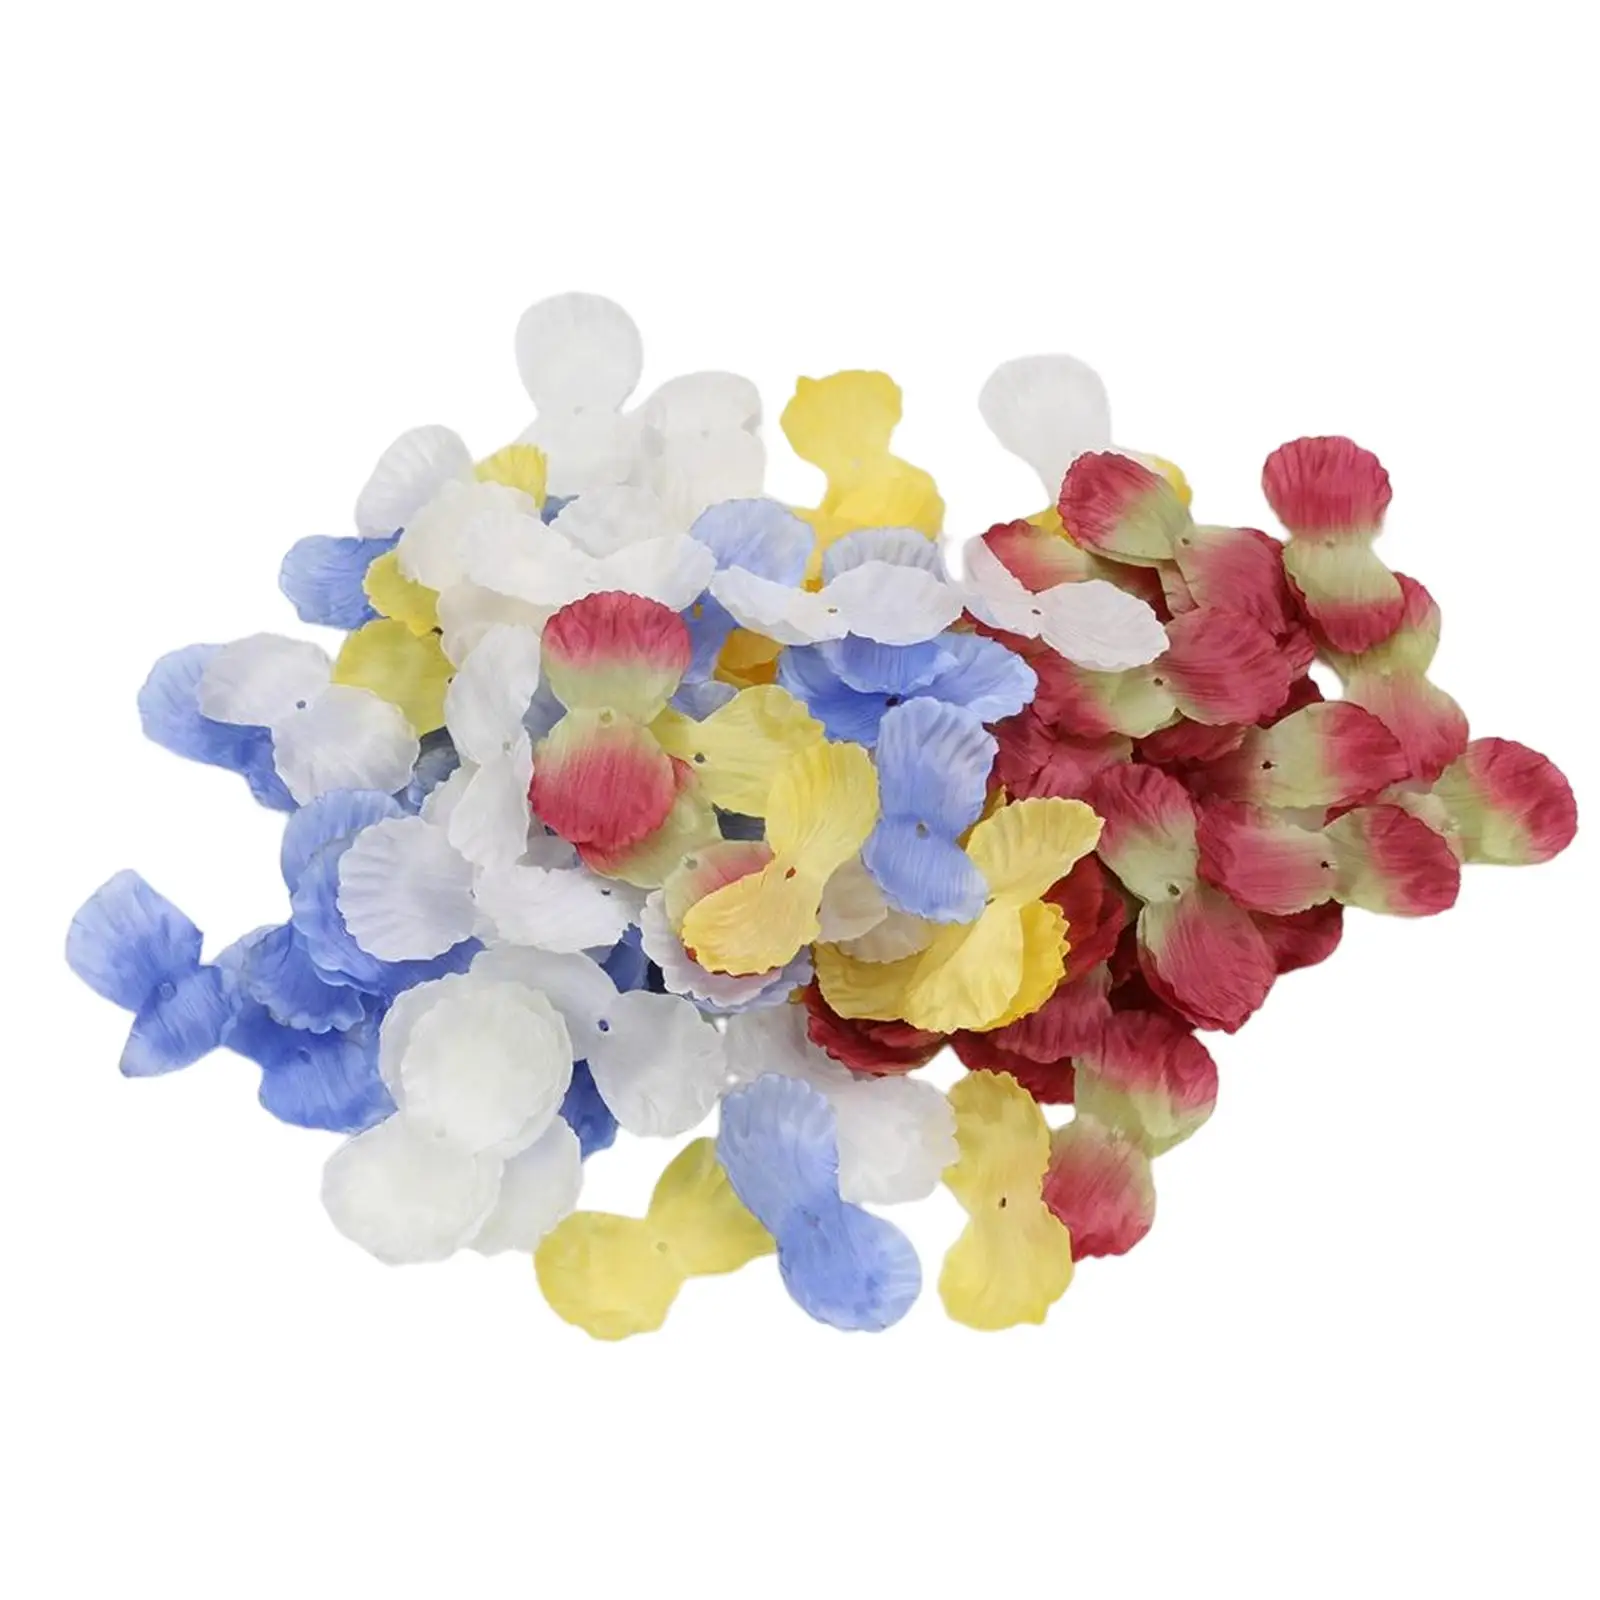 300x Handcraft Artificial Flower Petals Romantic Wedding decoration Floret DIY Material for Theme Party Wedding Garden